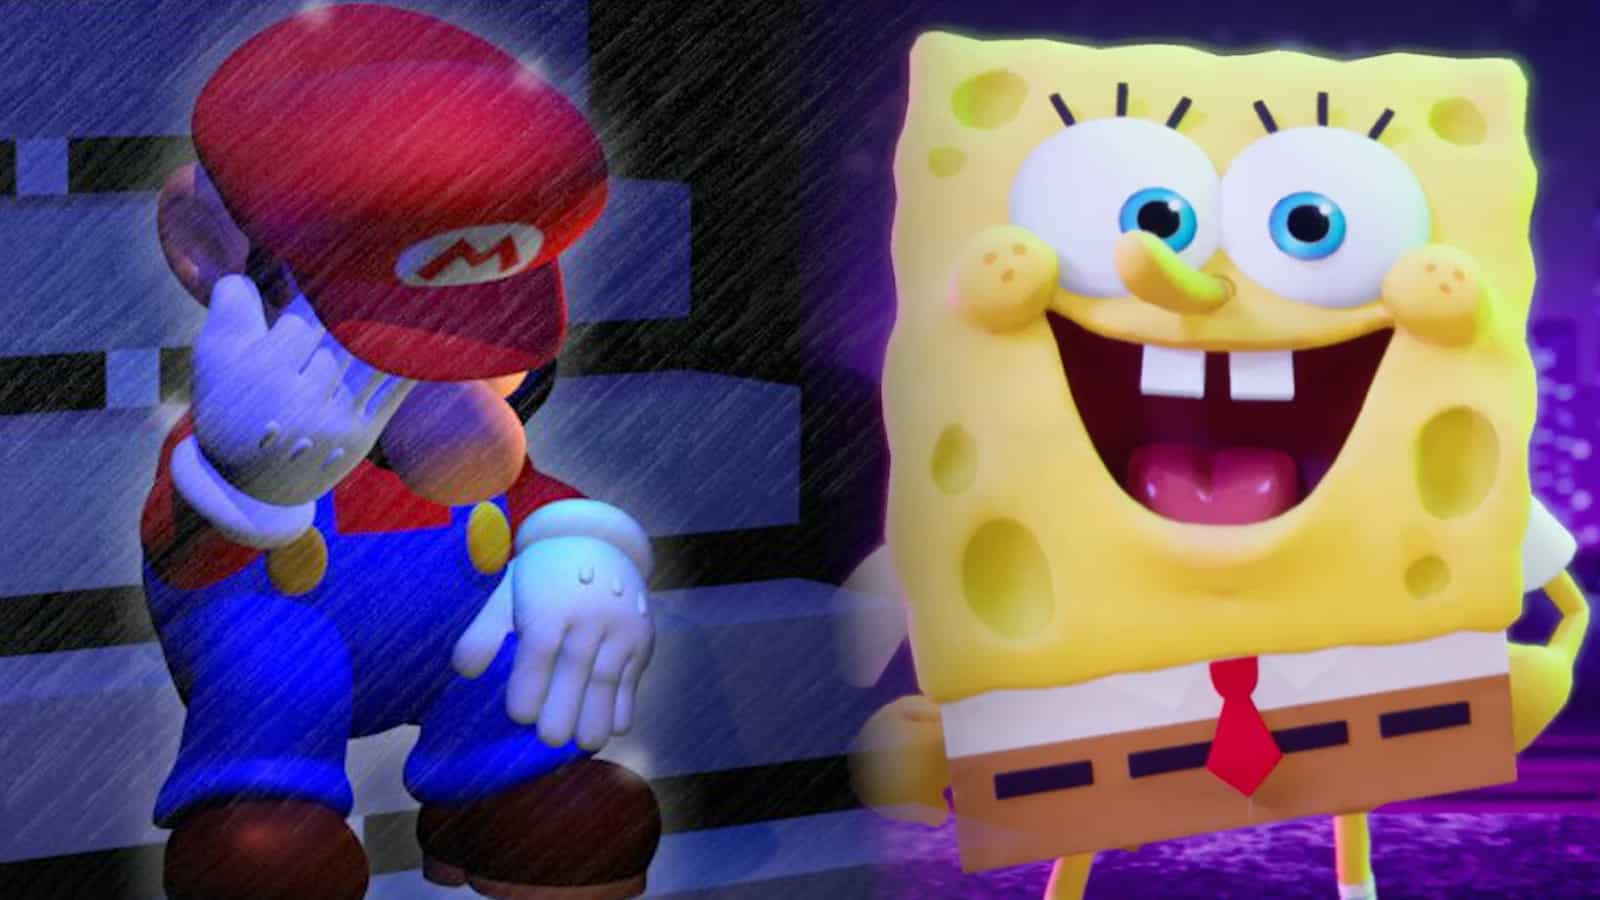 Mario is sad that spongebob and Nickelodeon allstars has been netcode than smash